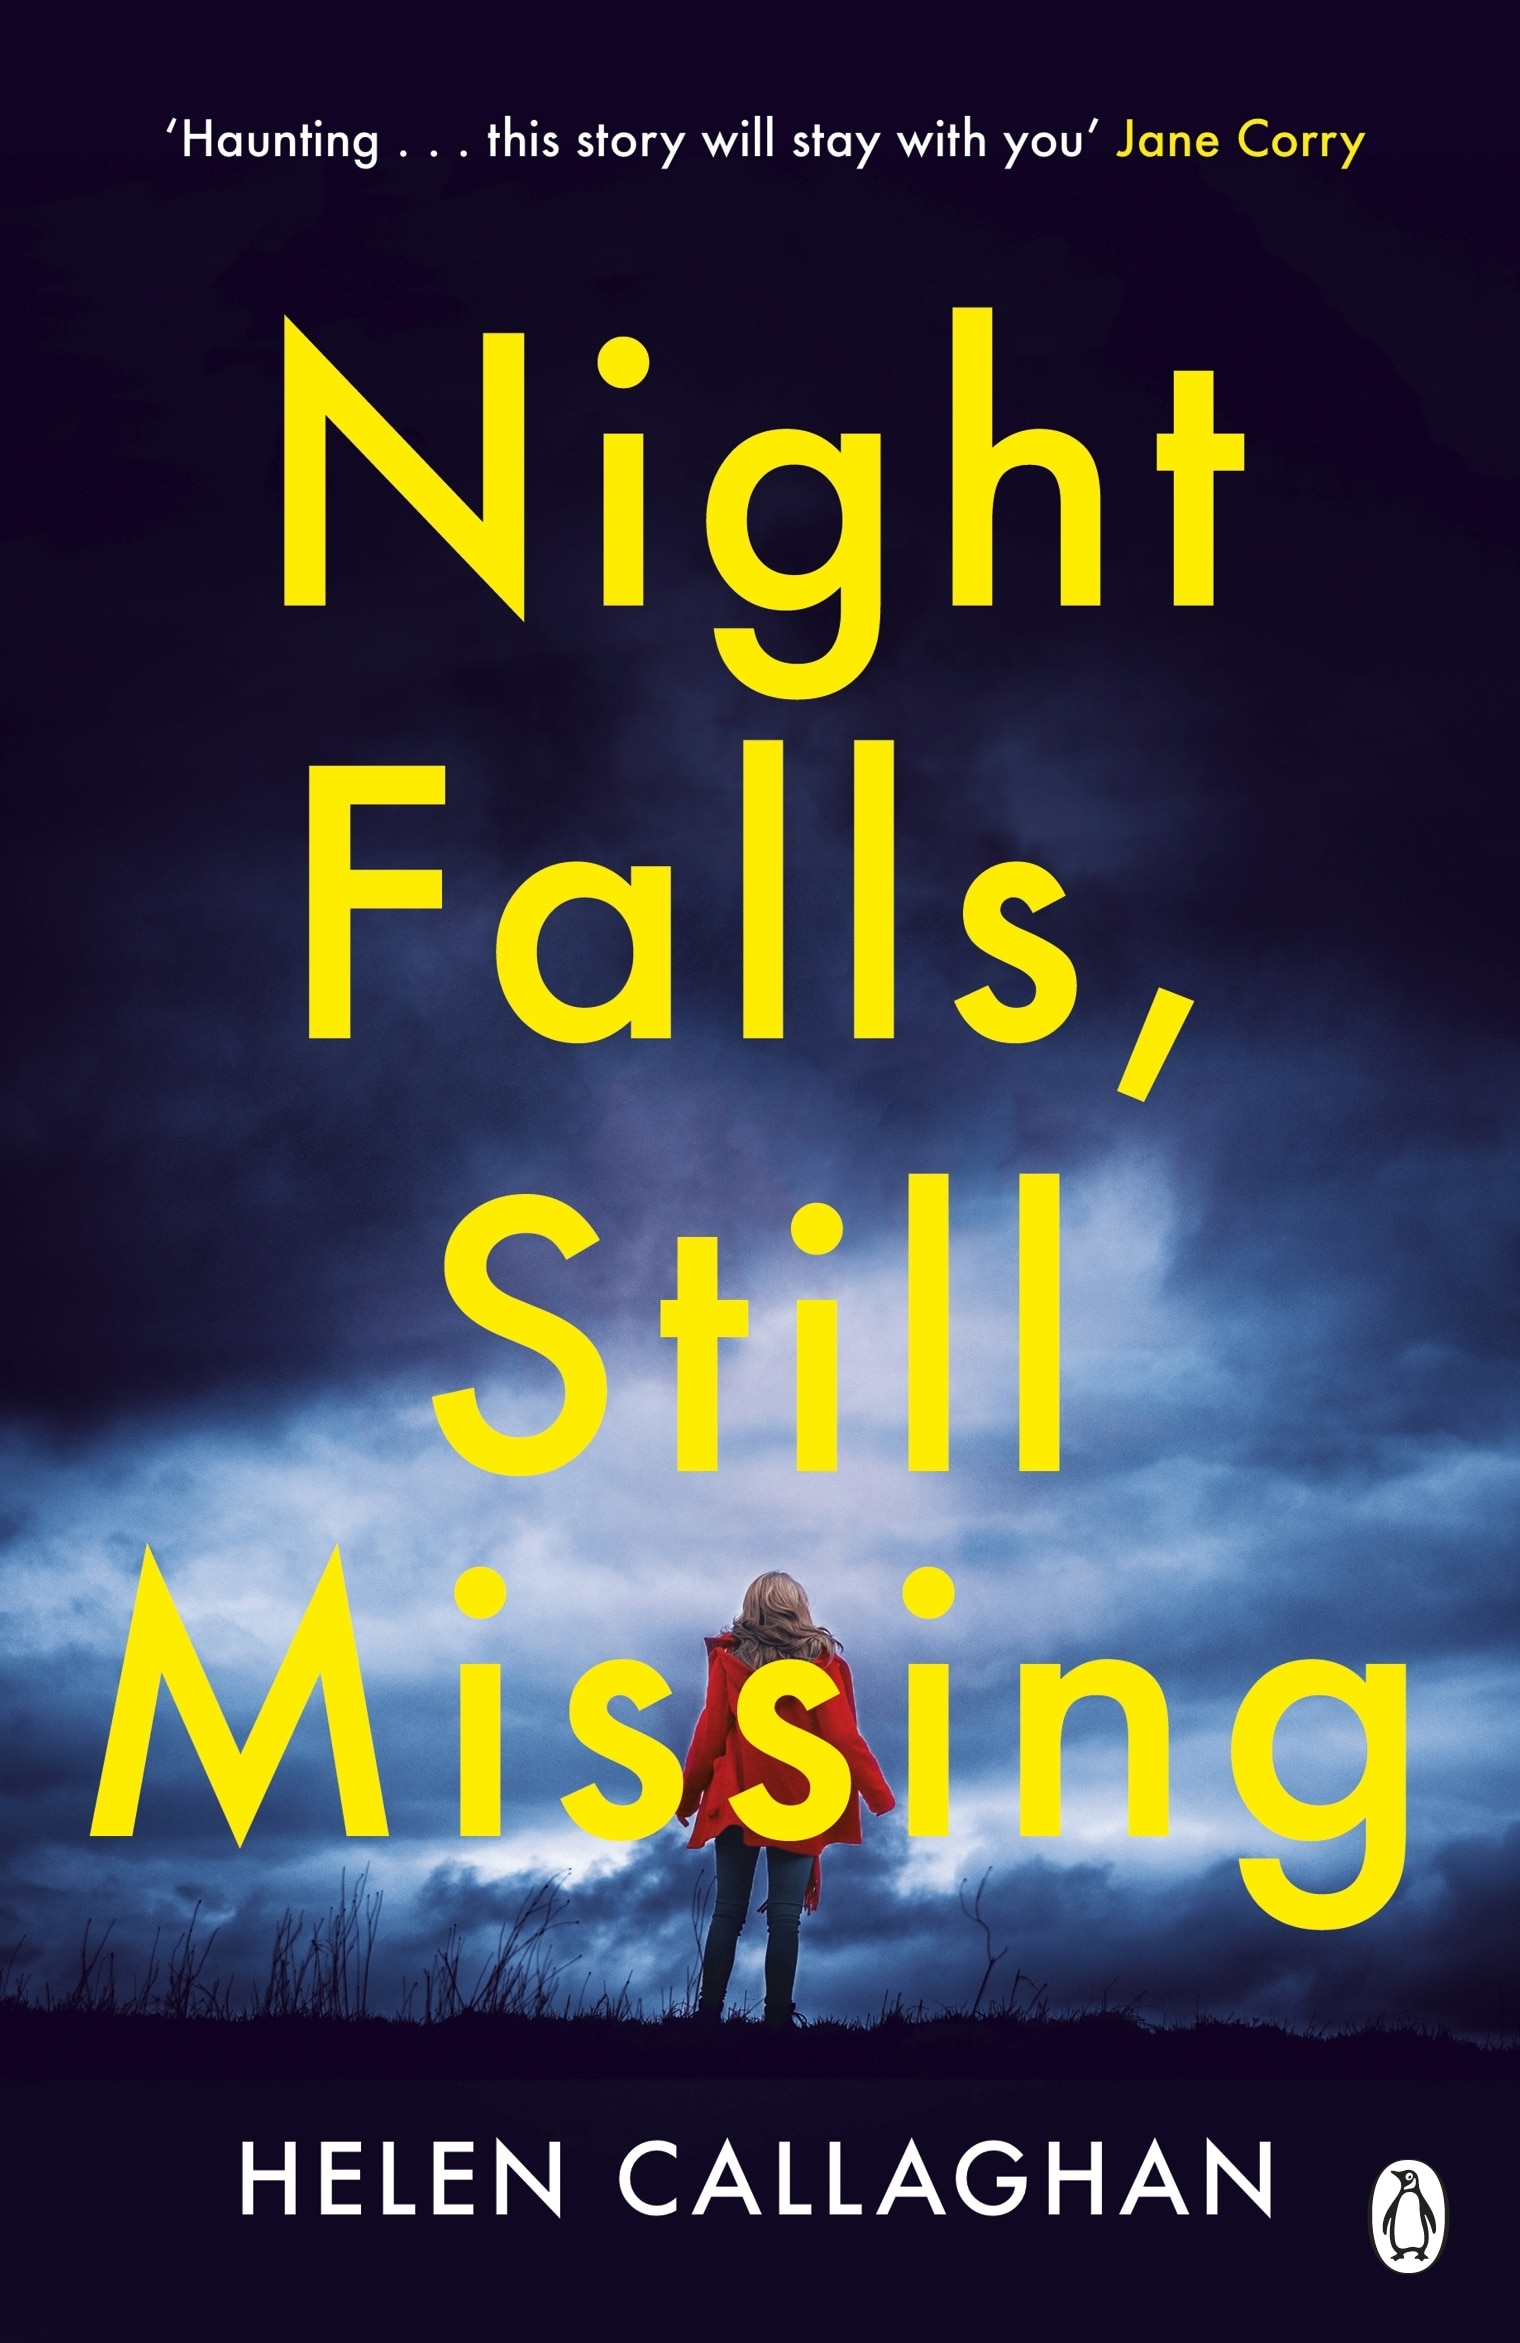 Book jacket of Night Falls, Still Missing by Helen Callaghan